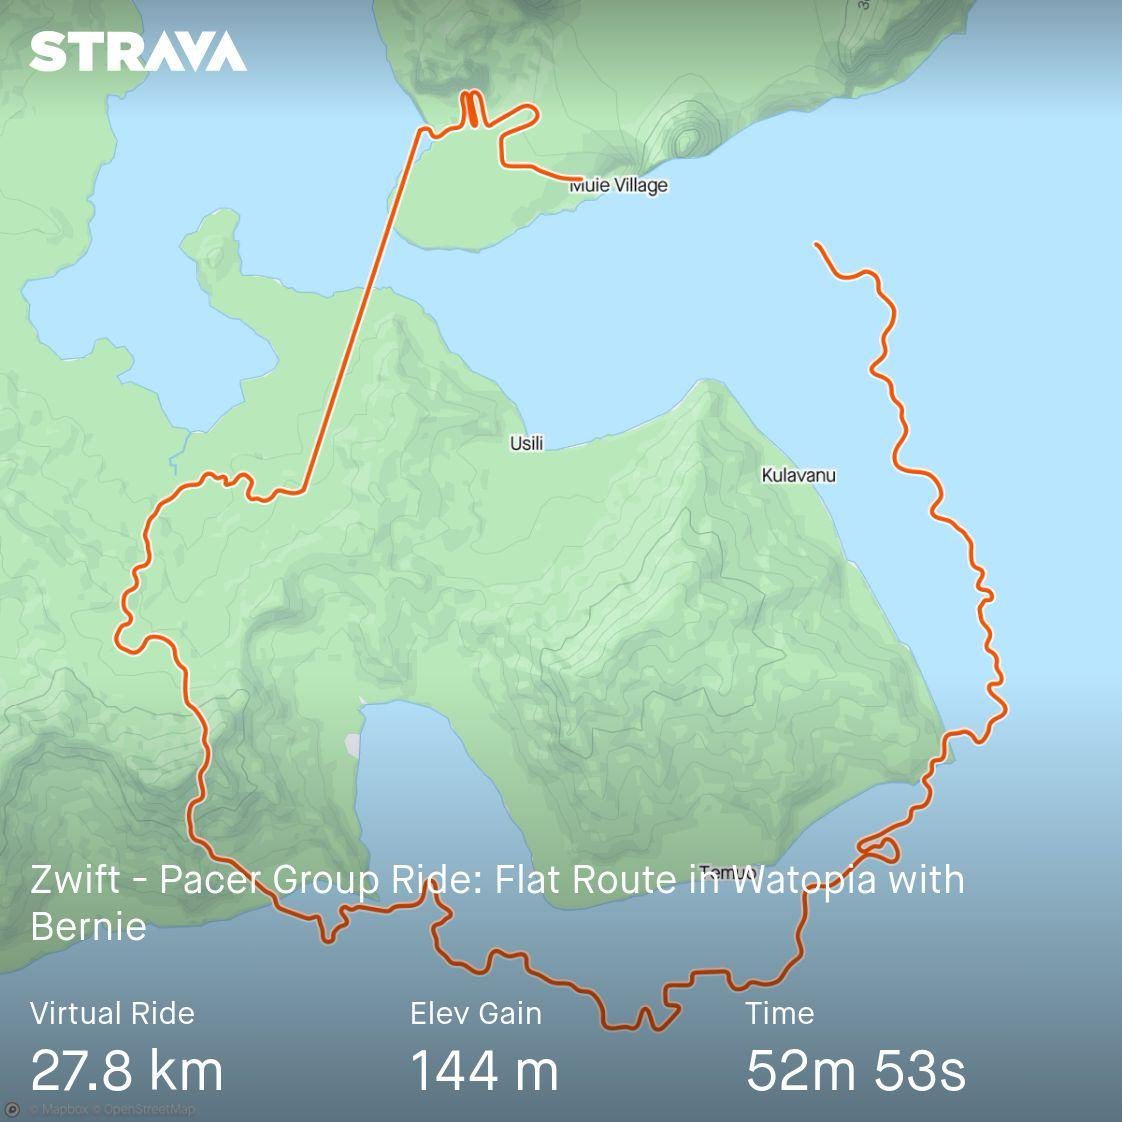 #zwift #gozwift #strava #wahoo #kickr #garmin #beatyesterday #strava #wahooligan #cycling

Check out my activity on Strava.
strava.app.link/fIaJx1031Ib